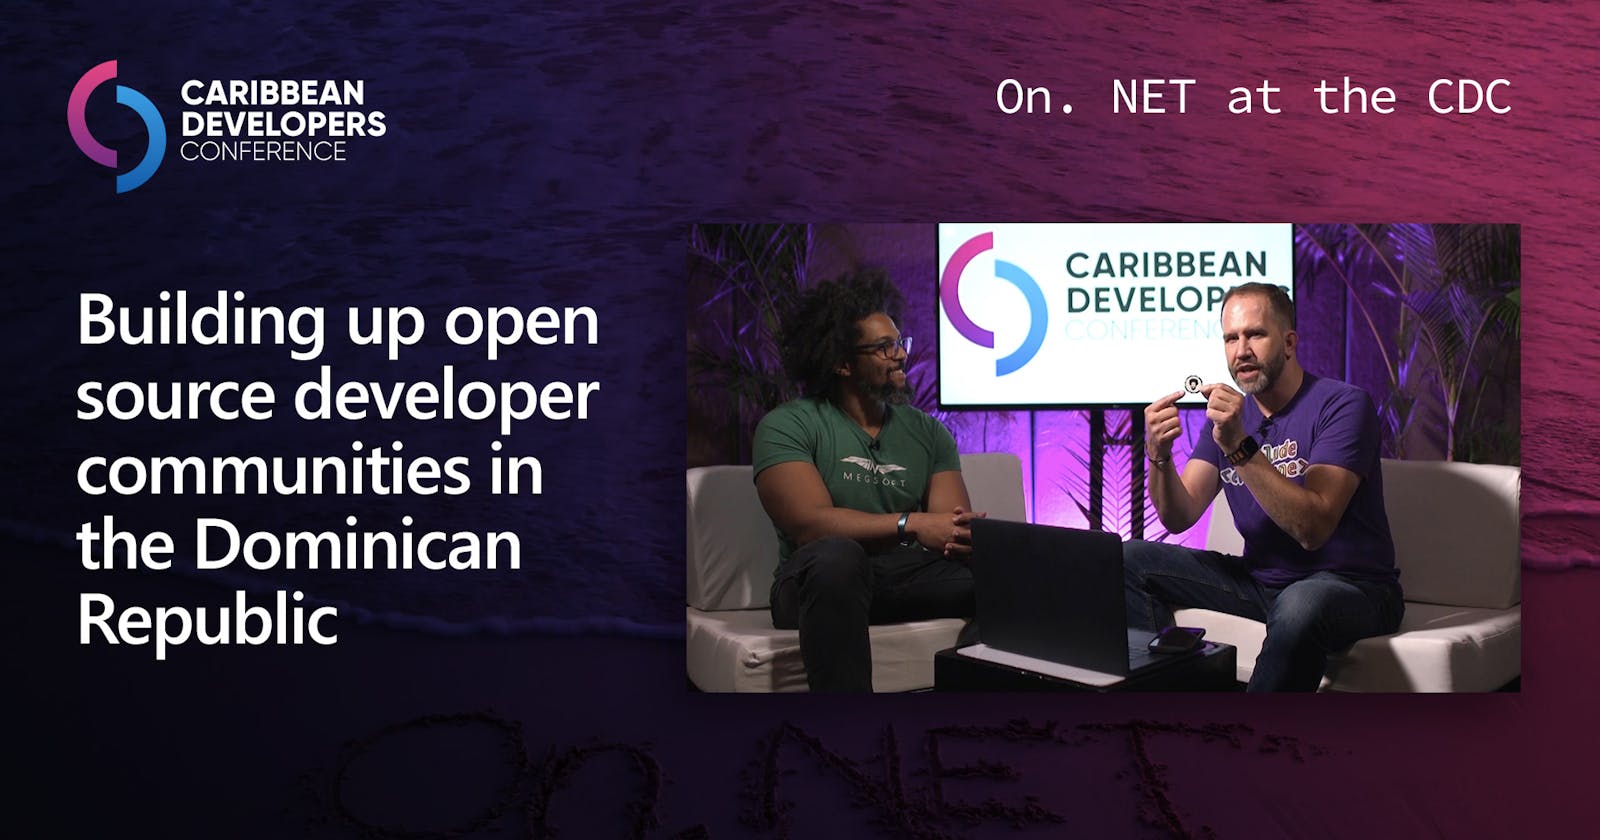 On.NET Episode: Building up open source developer communities in the Dominican Republic